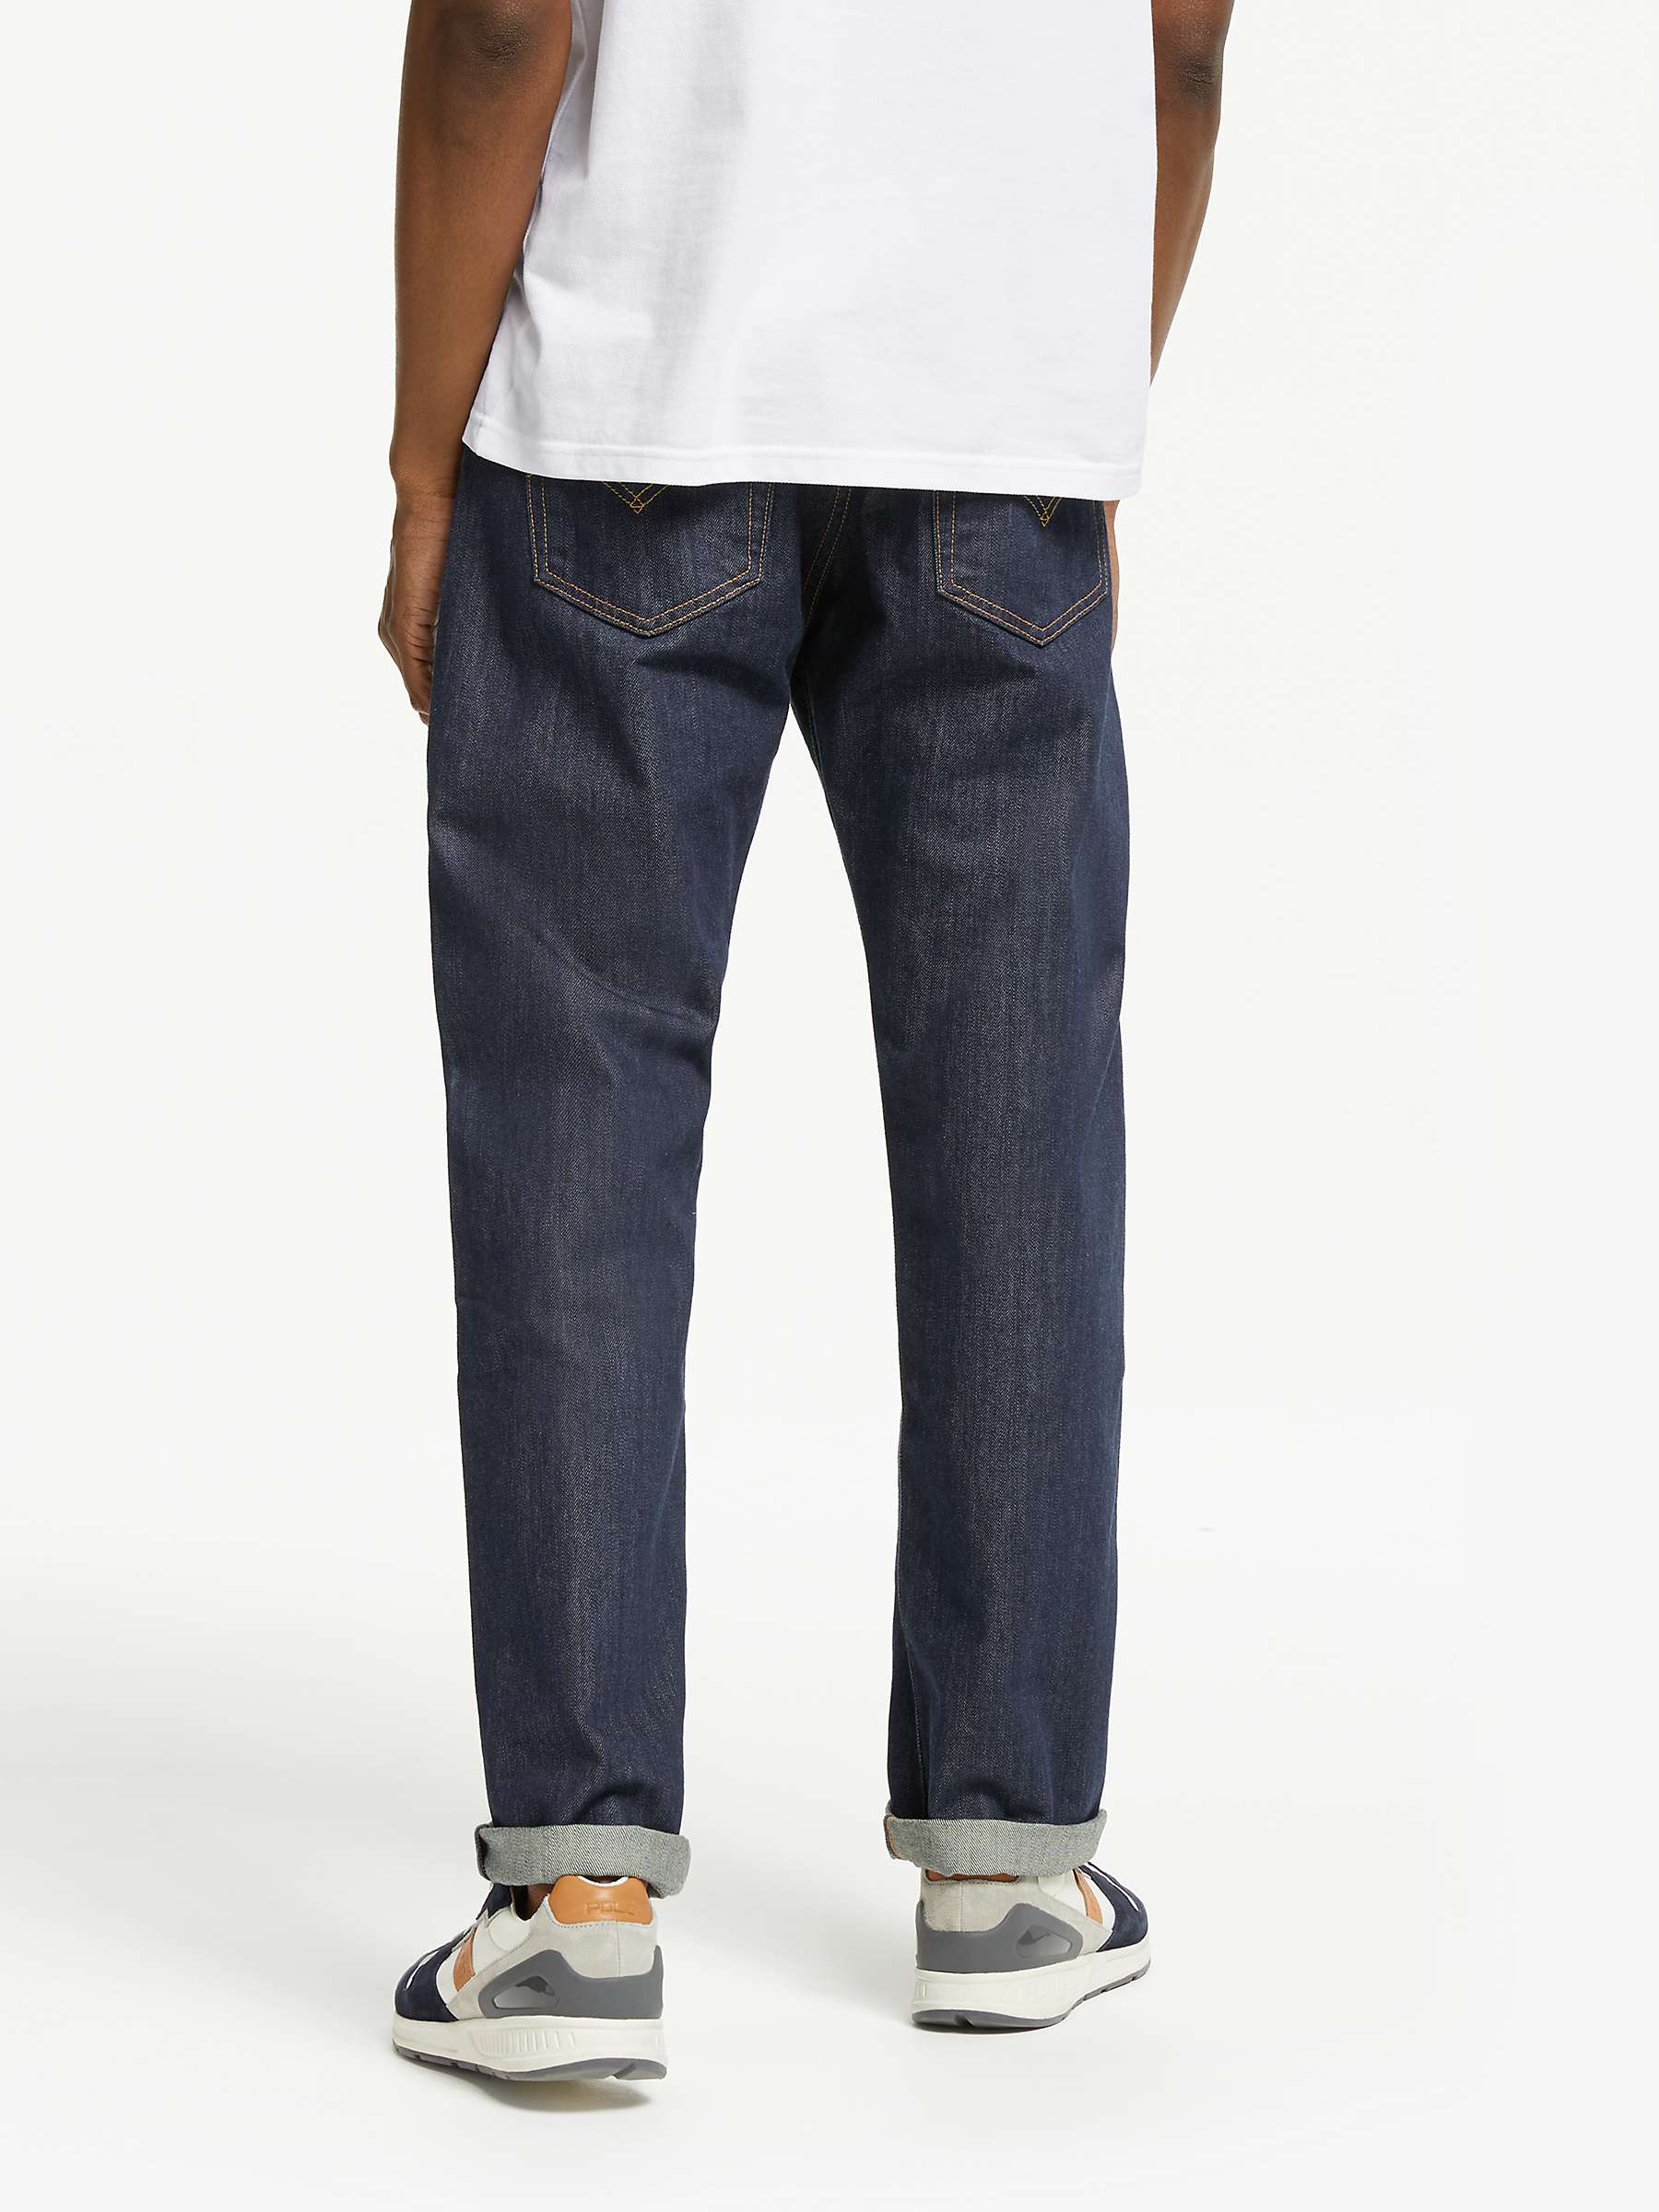 Buy Levi's 501 Original Straight Jeans, Marlon Online at johnlewis.com